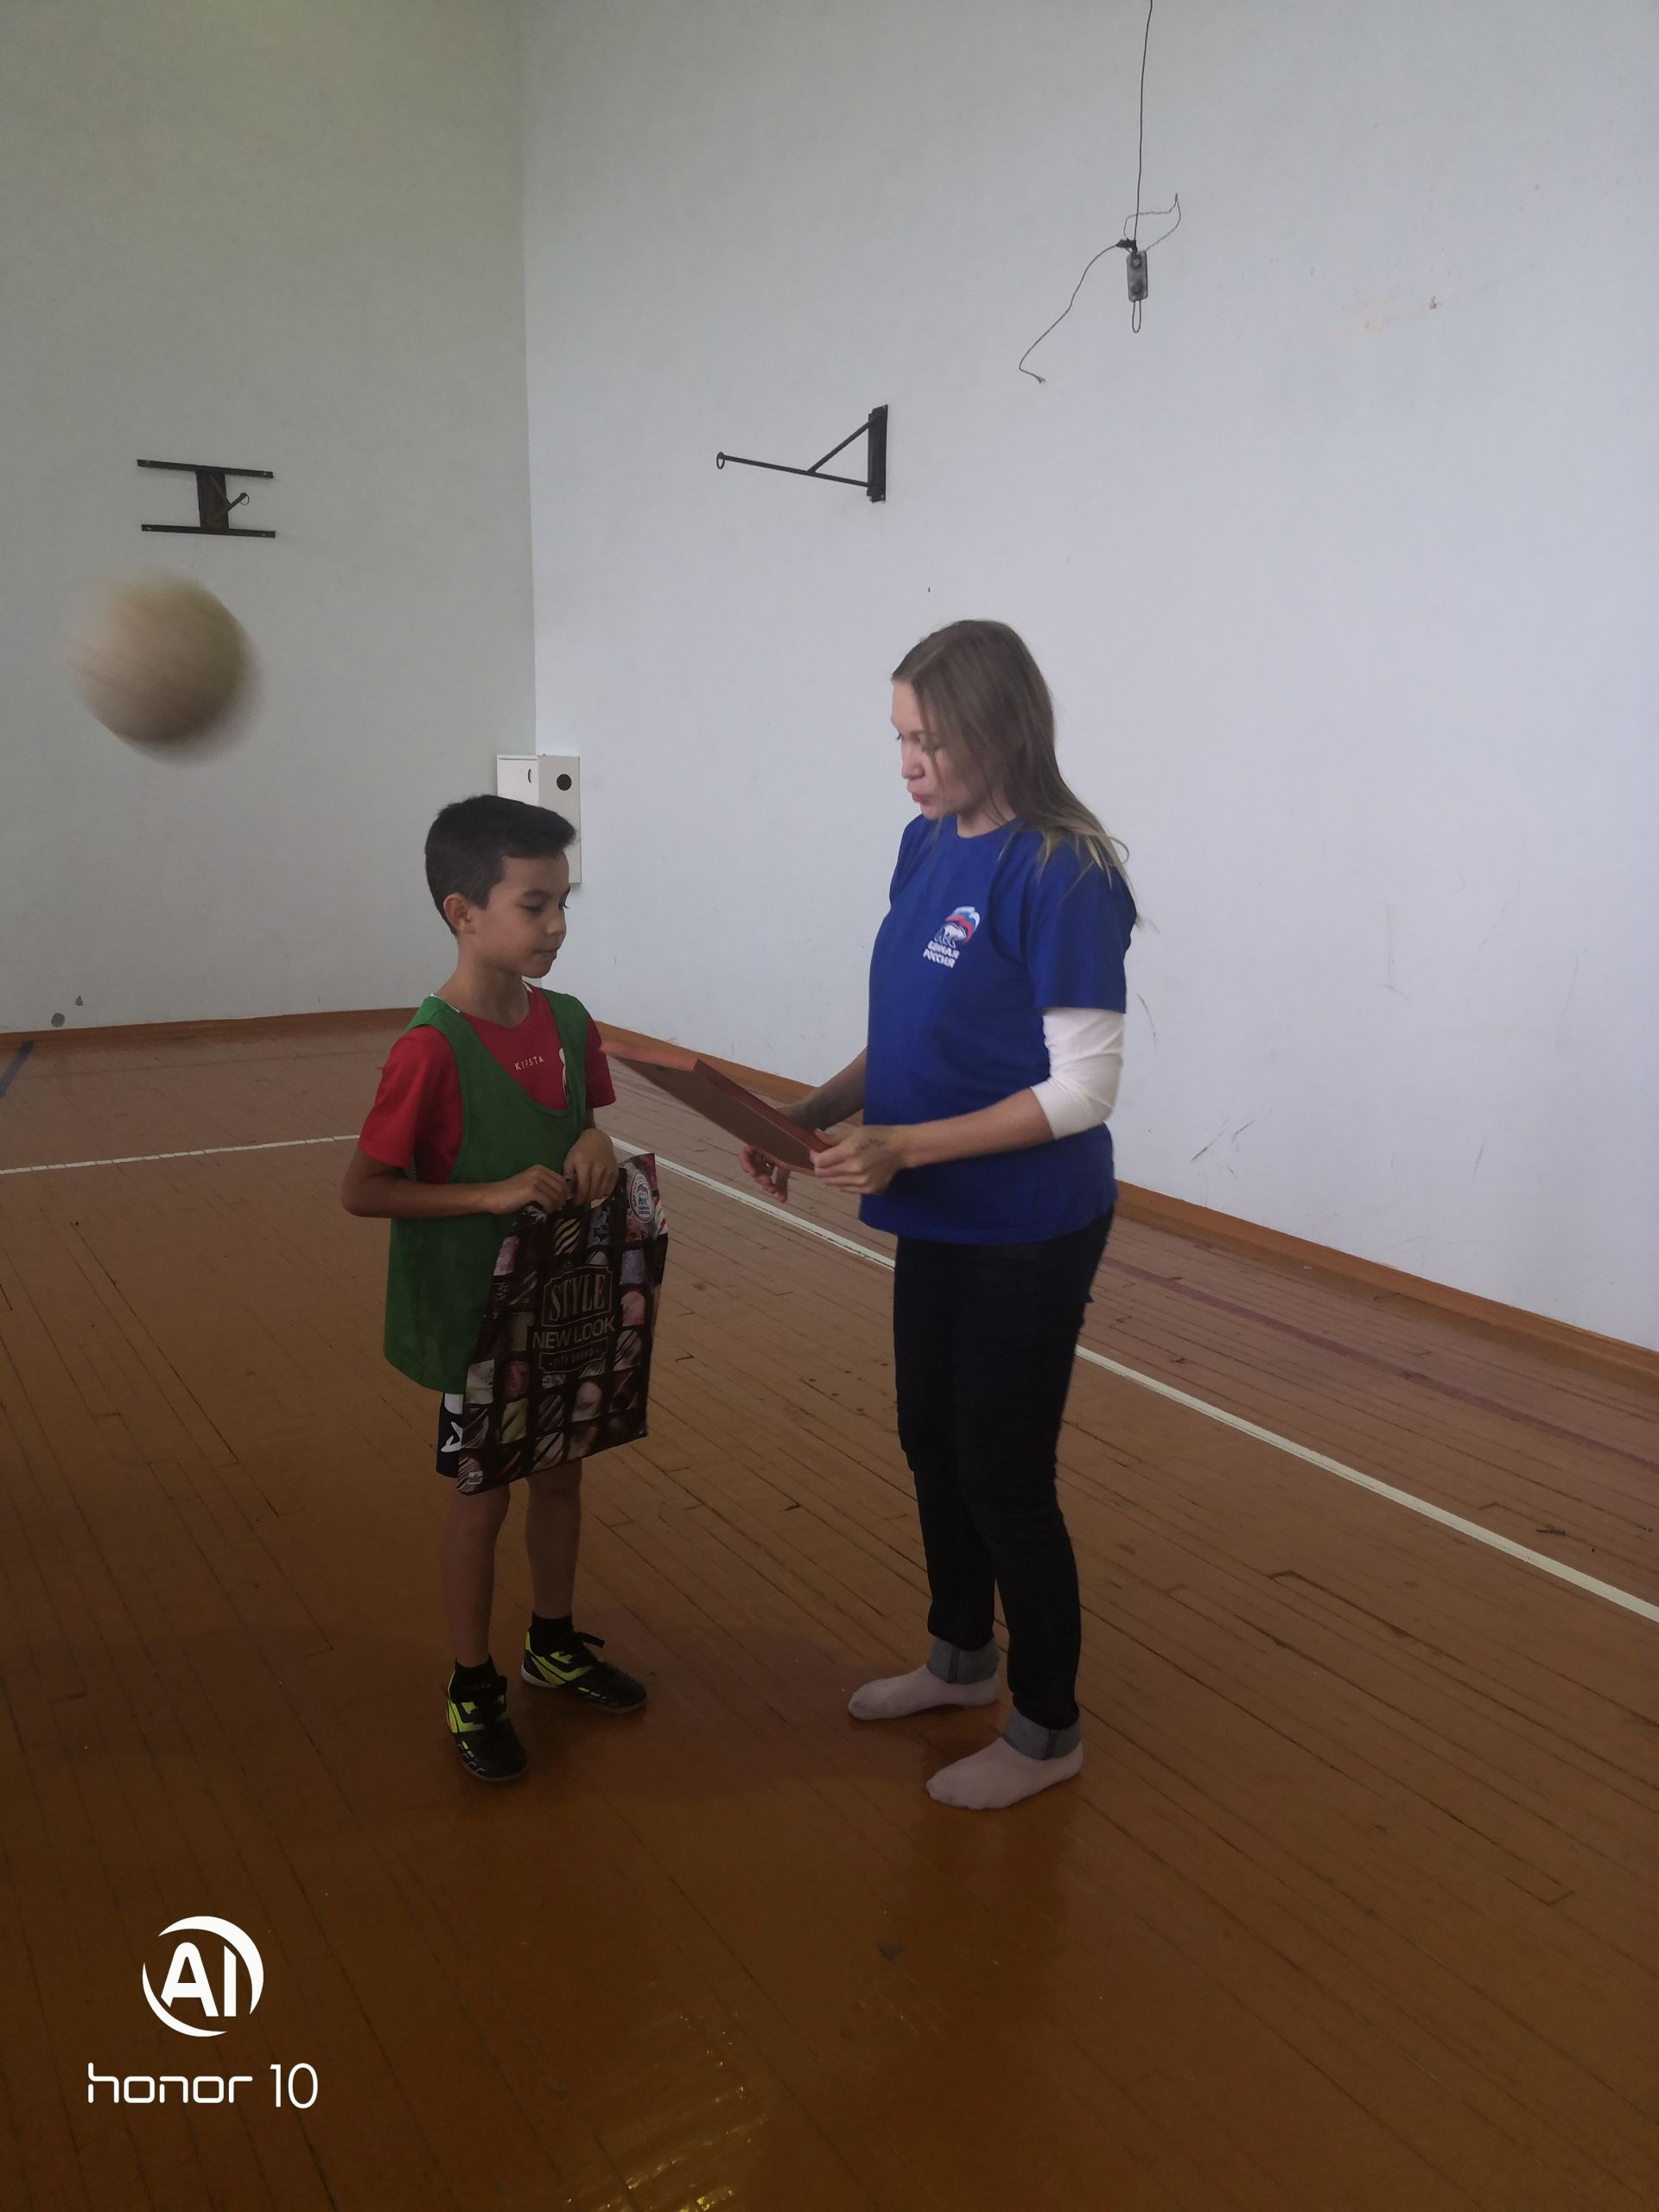 Нурлат: турнир по мини-футболу в рамках партийного проекта